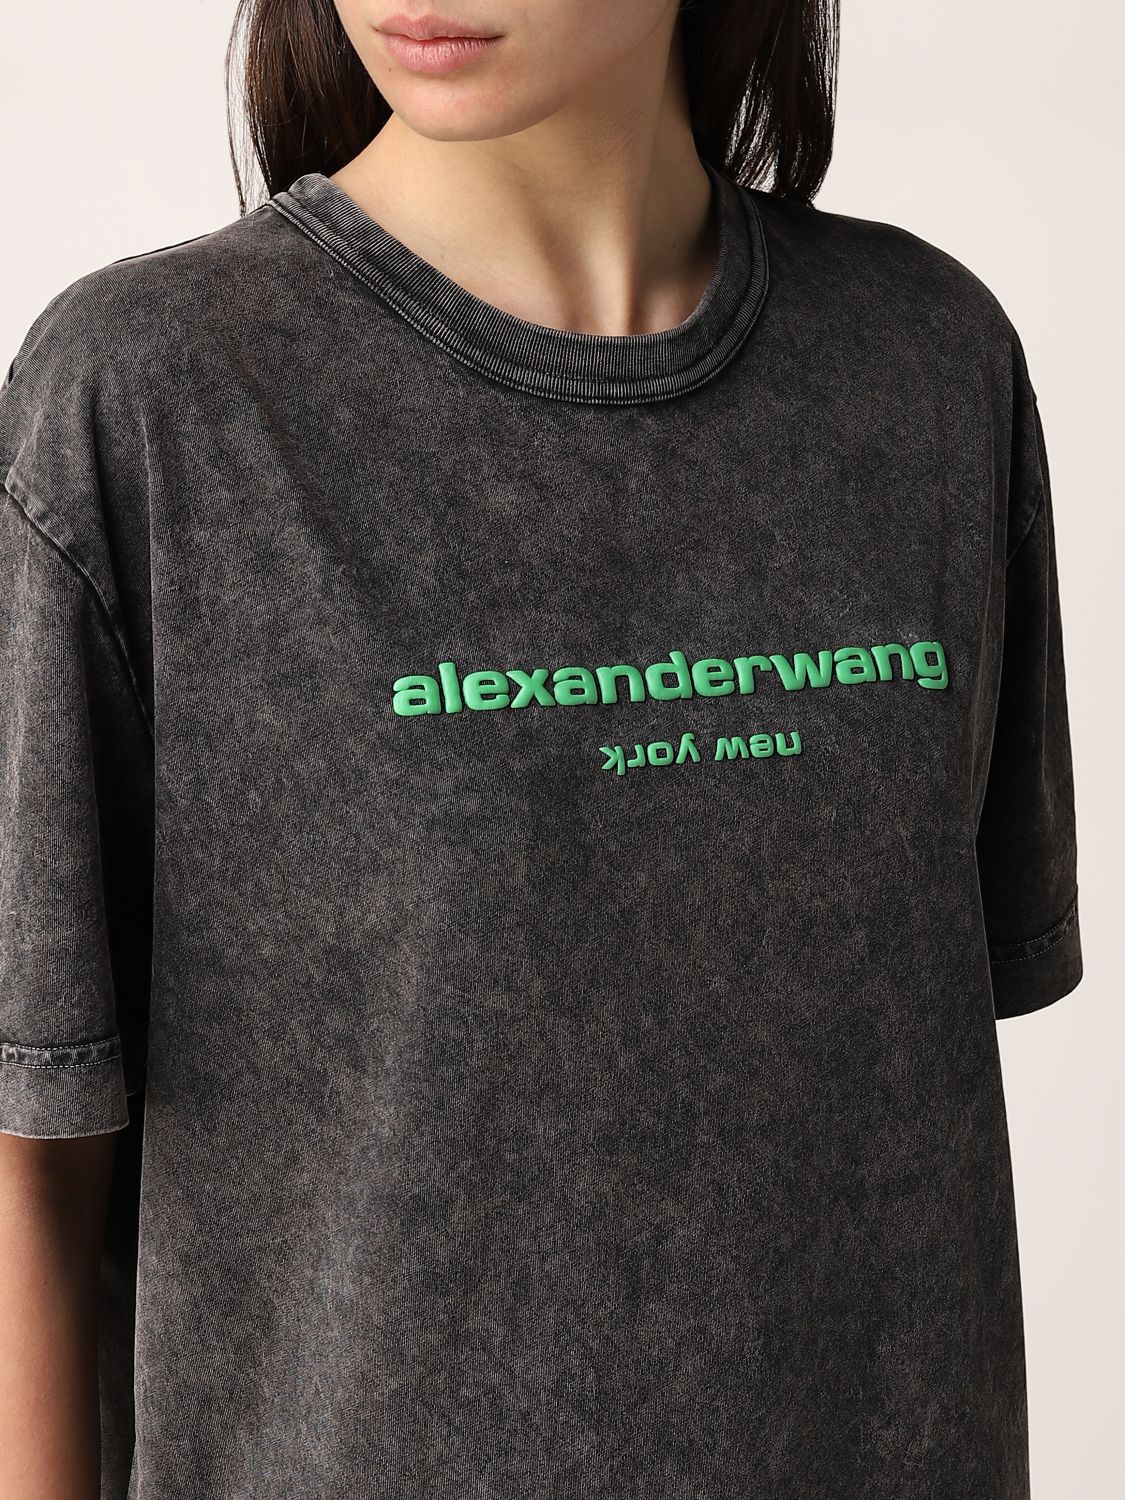 Alexander wang クレジットカードTシャツ